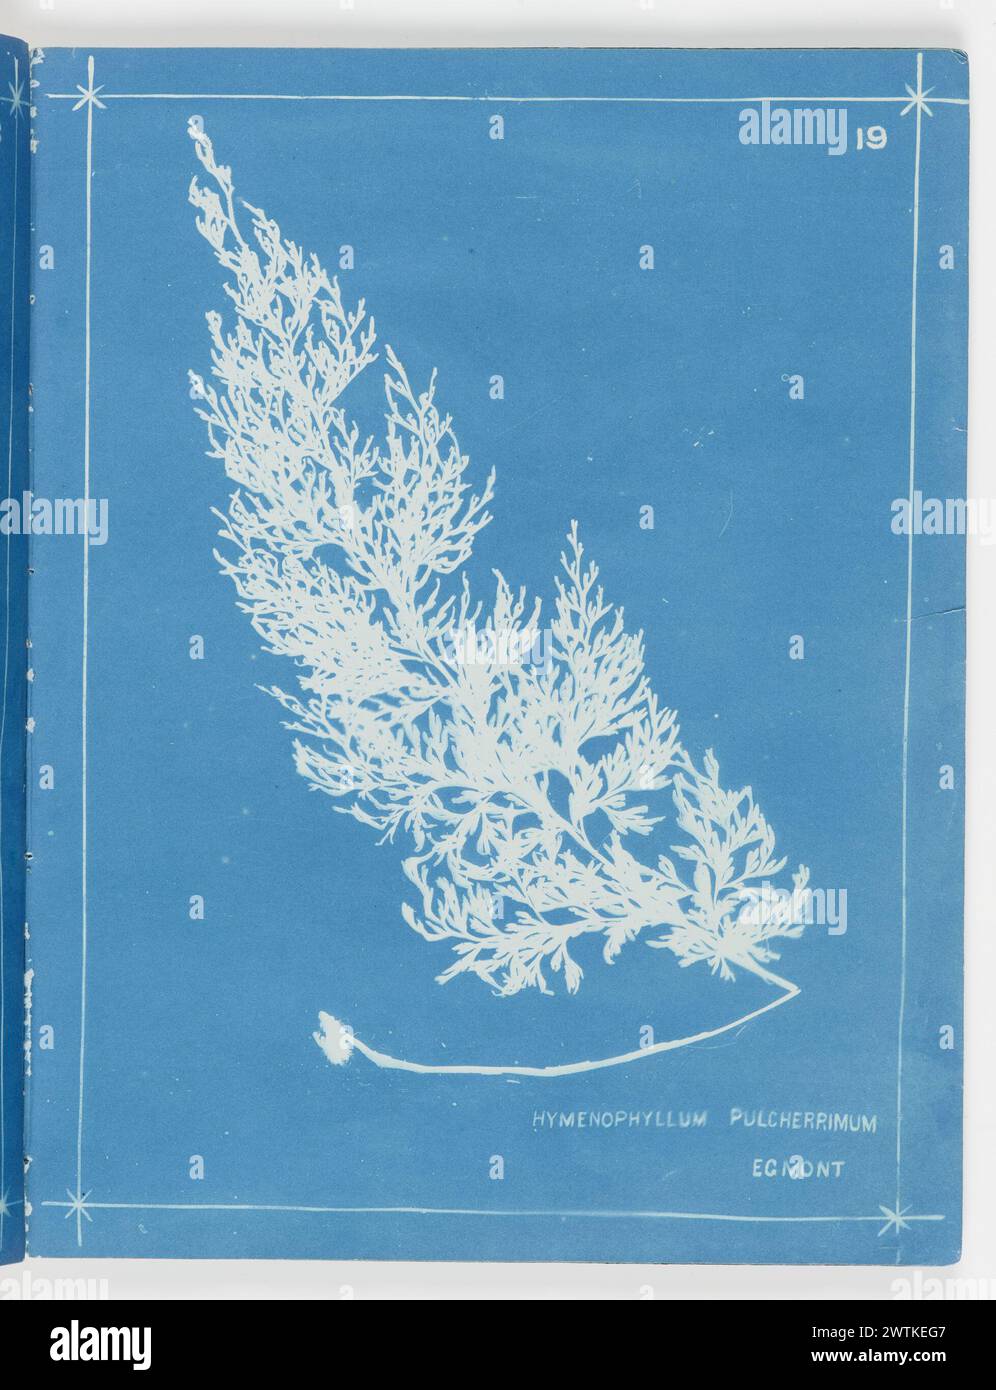 Hymenophyllum pulcherrimum, Egmont. From the album: New Zealand ferns, 148 varieties photographic prints, cyanotypes, vintage prints Stock Photo